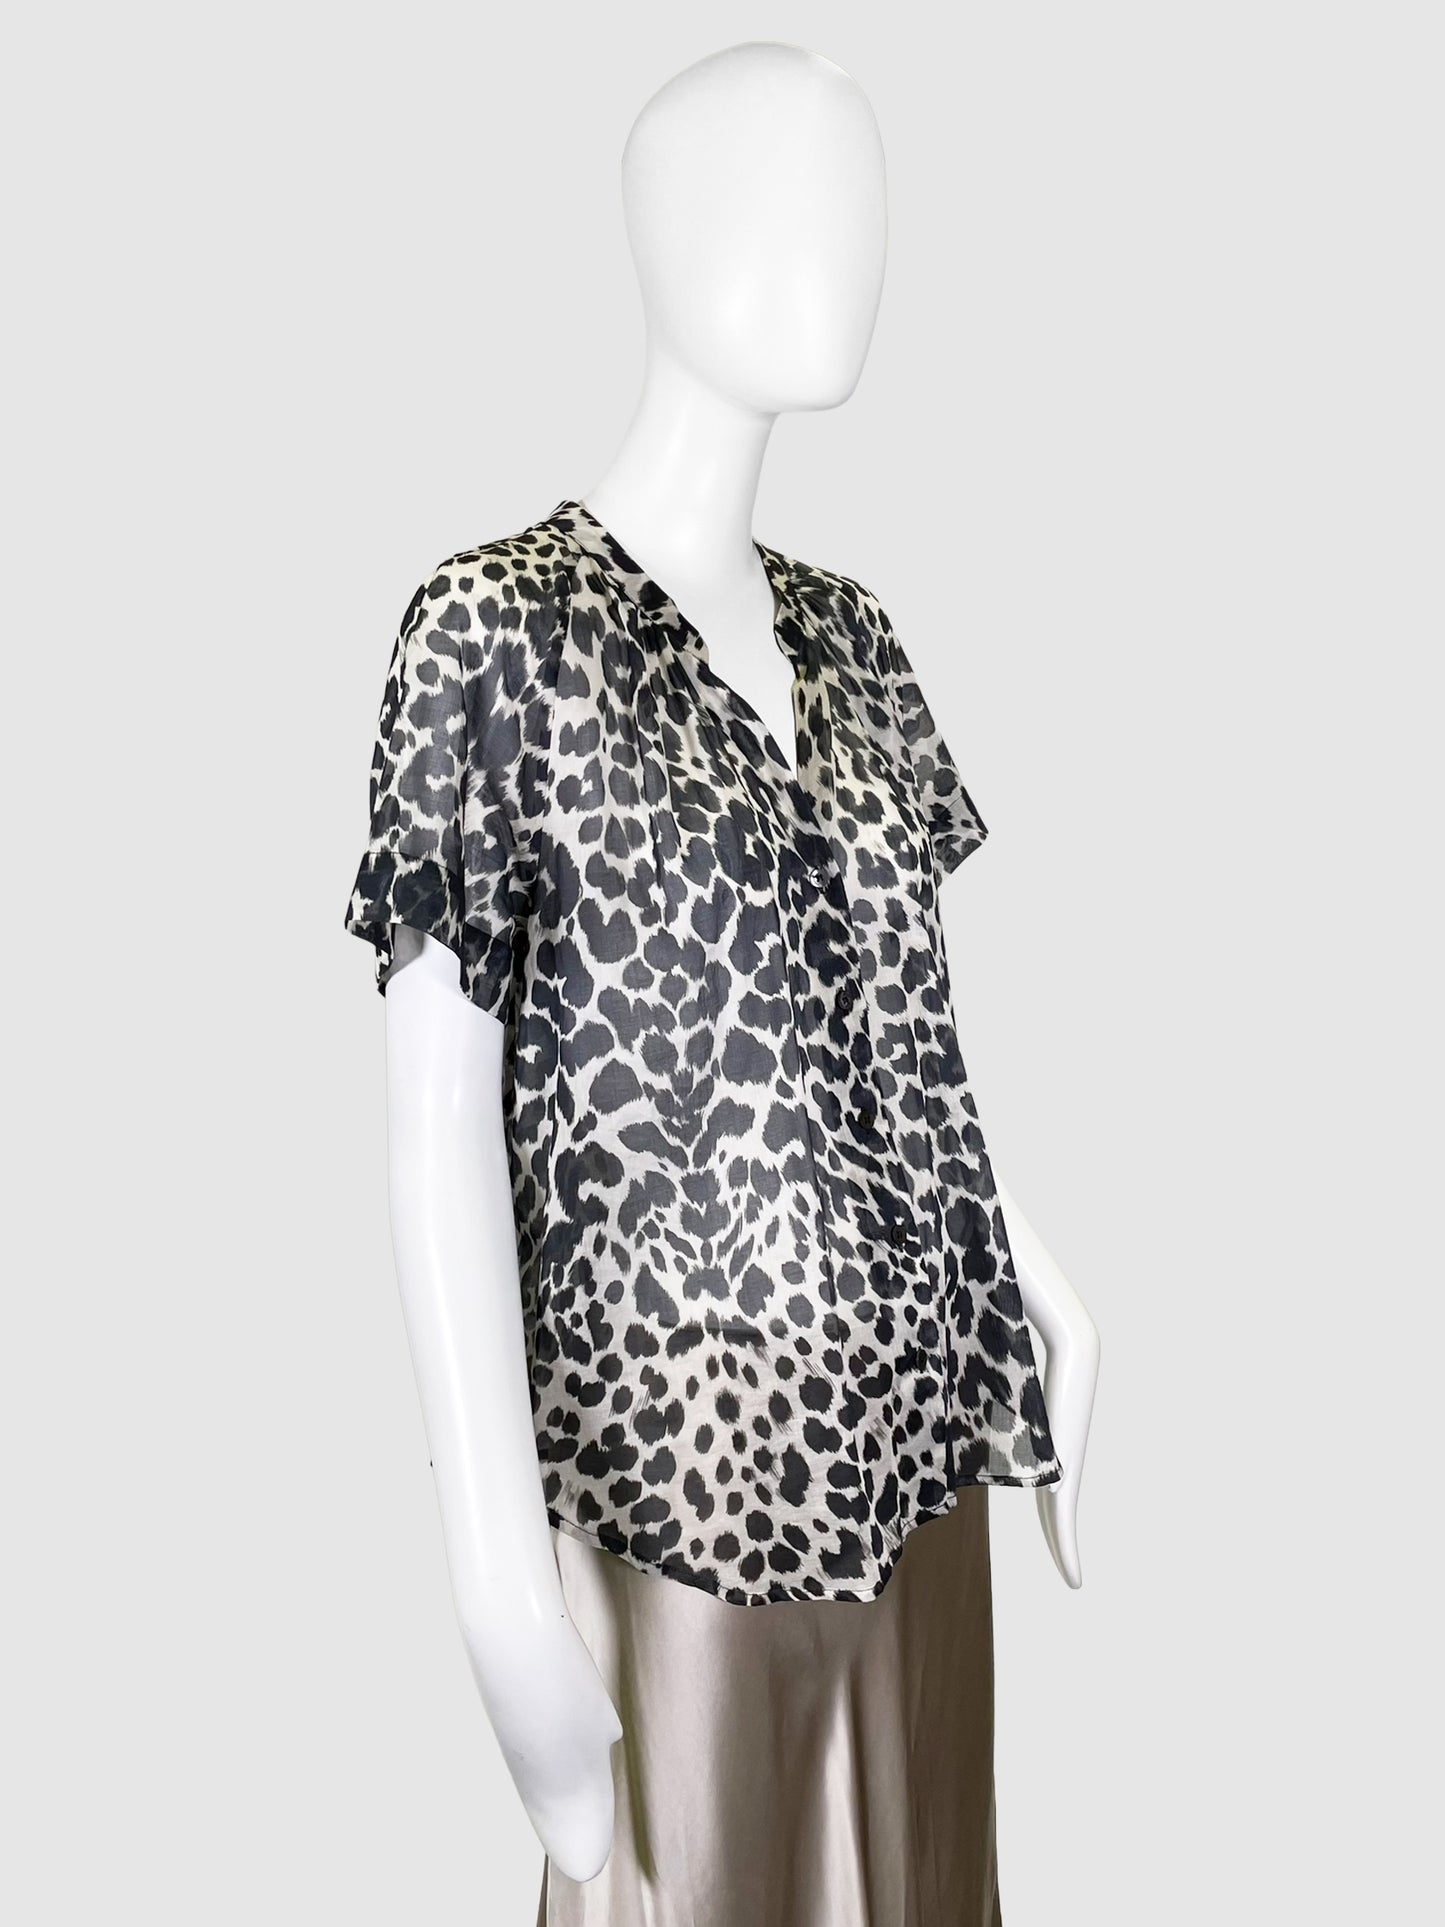 Dries Van Noten Semi-Sheer Leopard Print Blouse - Size 40